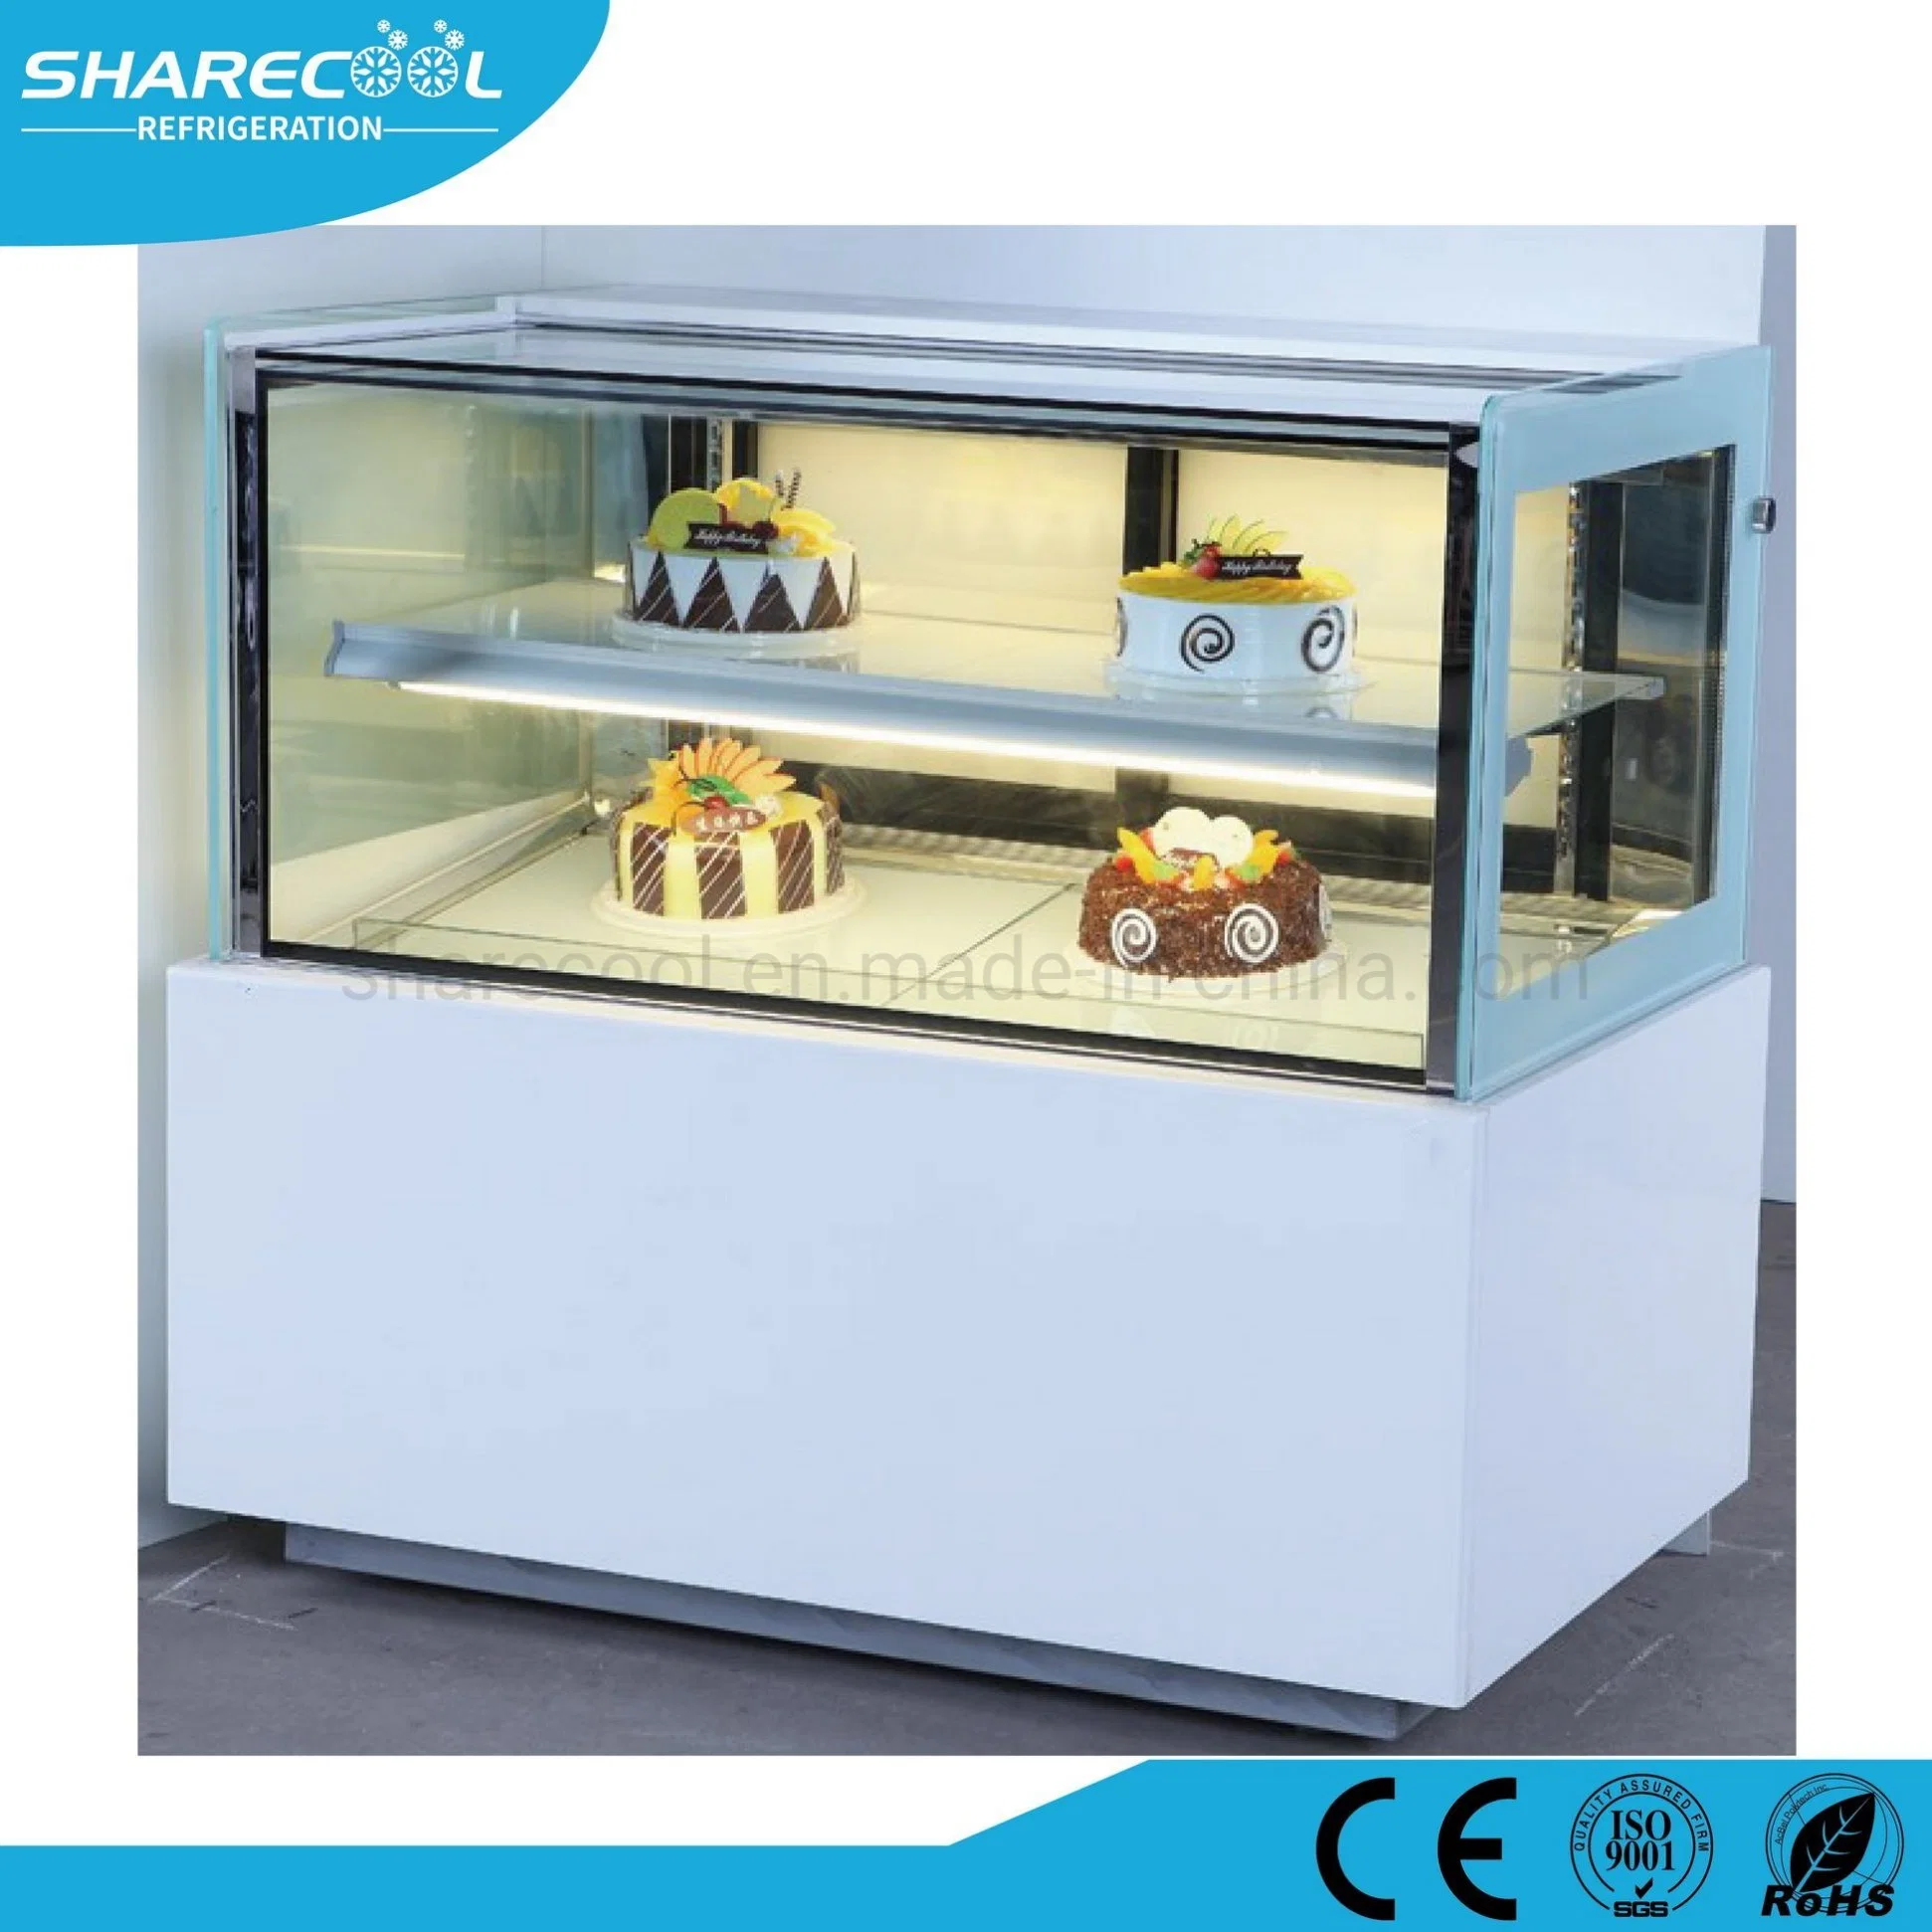 Cake Showcase Dessert Refrigerator Pastry Cooler